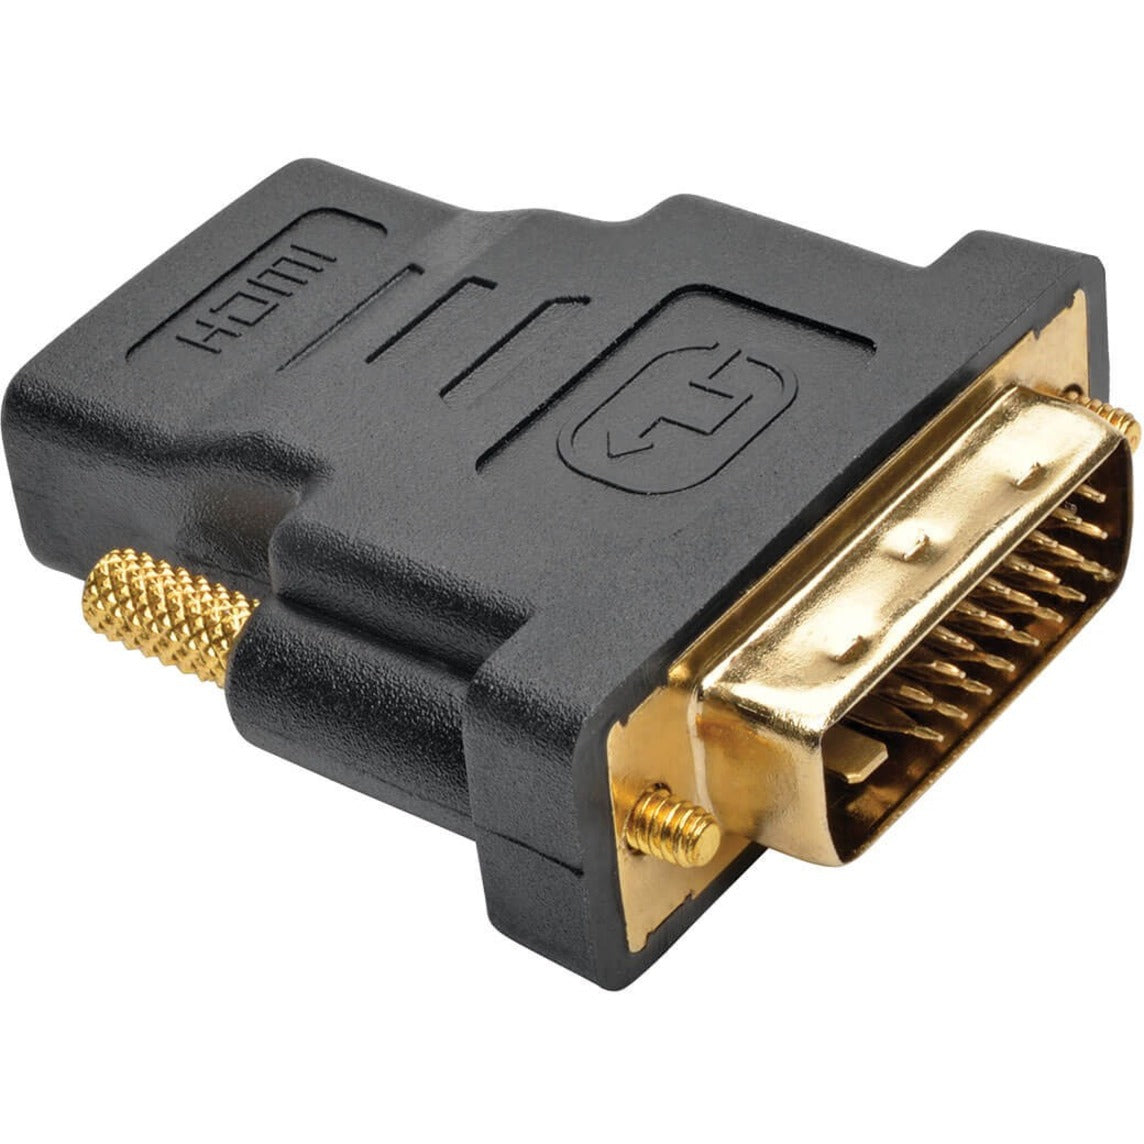 Tripp Lite P782-010-DH HDMI/DVI/USB KVM Cable Kit, 10 ft., Lifetime Warranty, RoHS Certified